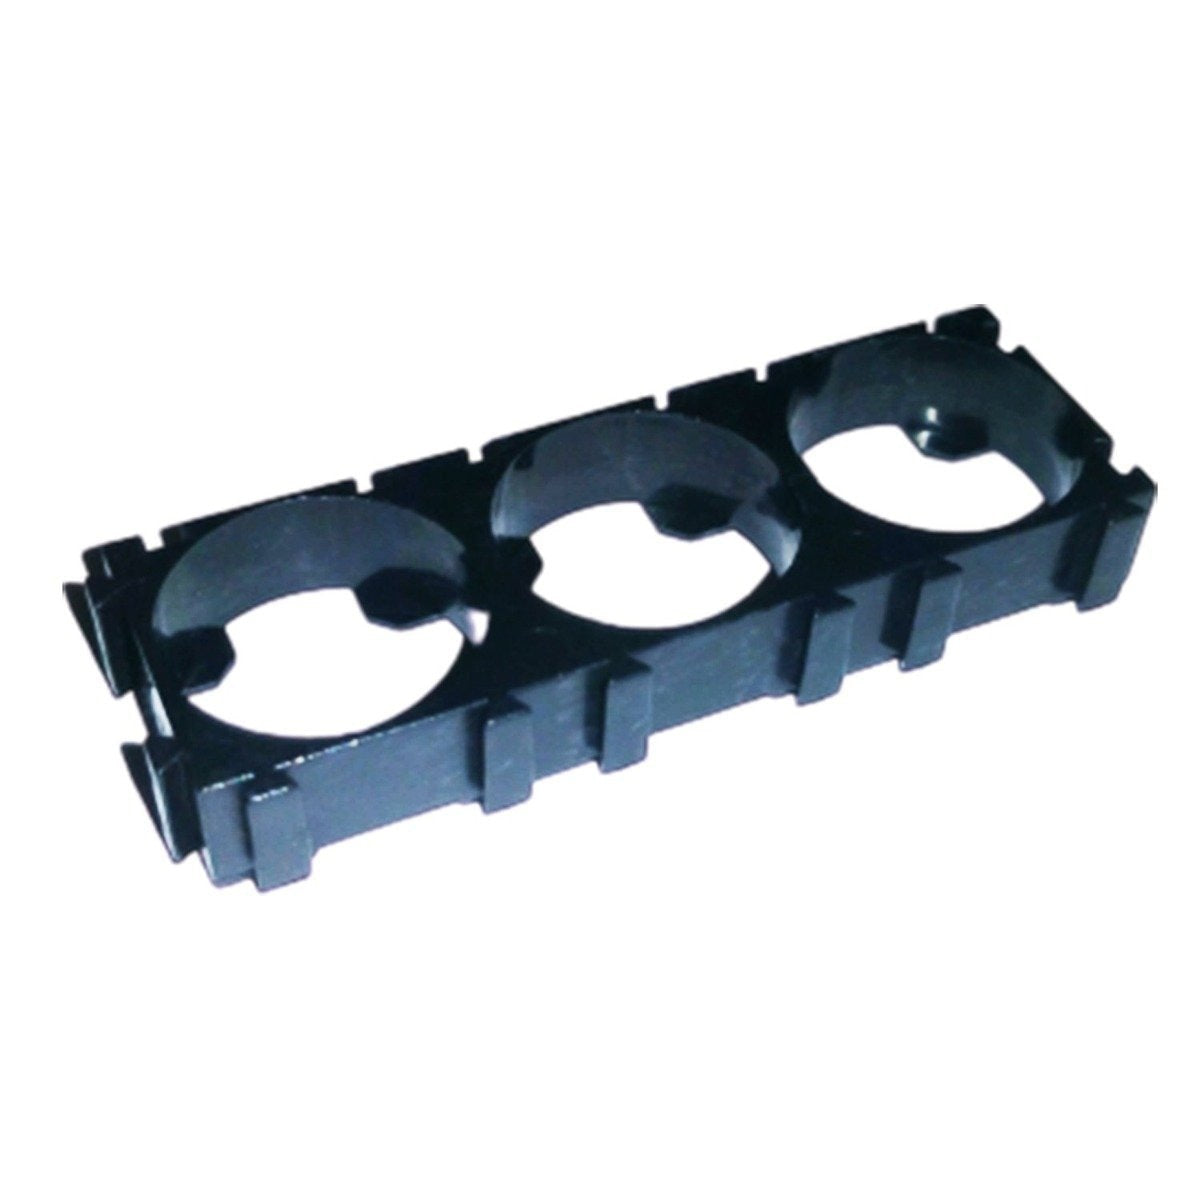 10pcs 1x3 3x1 18650 Battery Spacer Holder Radiating Shell Plastic Bracket DIY Spacers